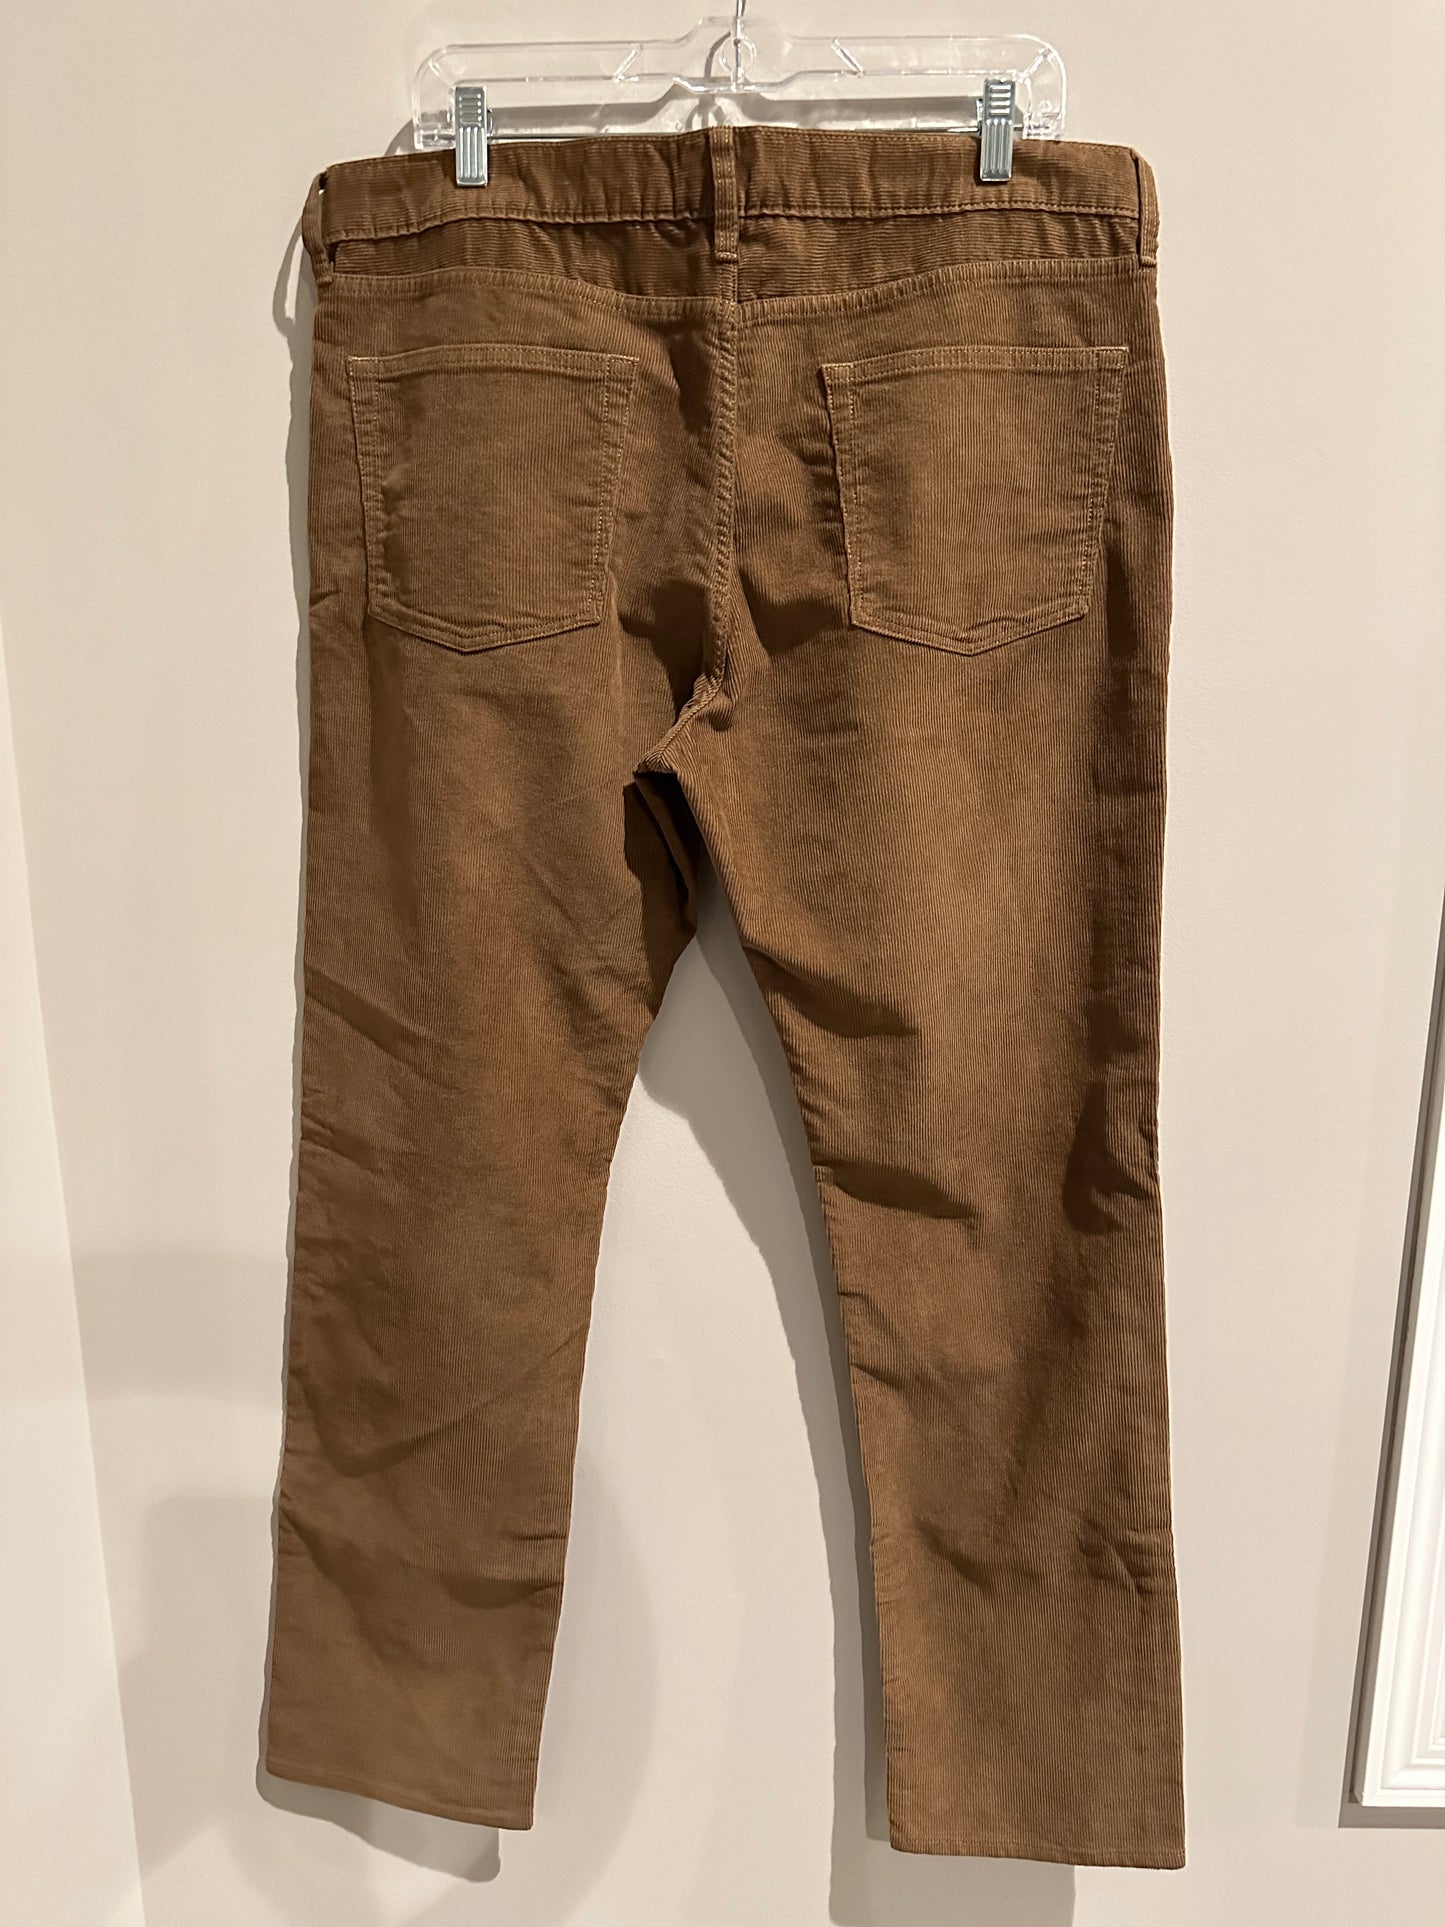 J.Crew Men's Size 35x32 (marked) Cognac Brown Corduroy Pants